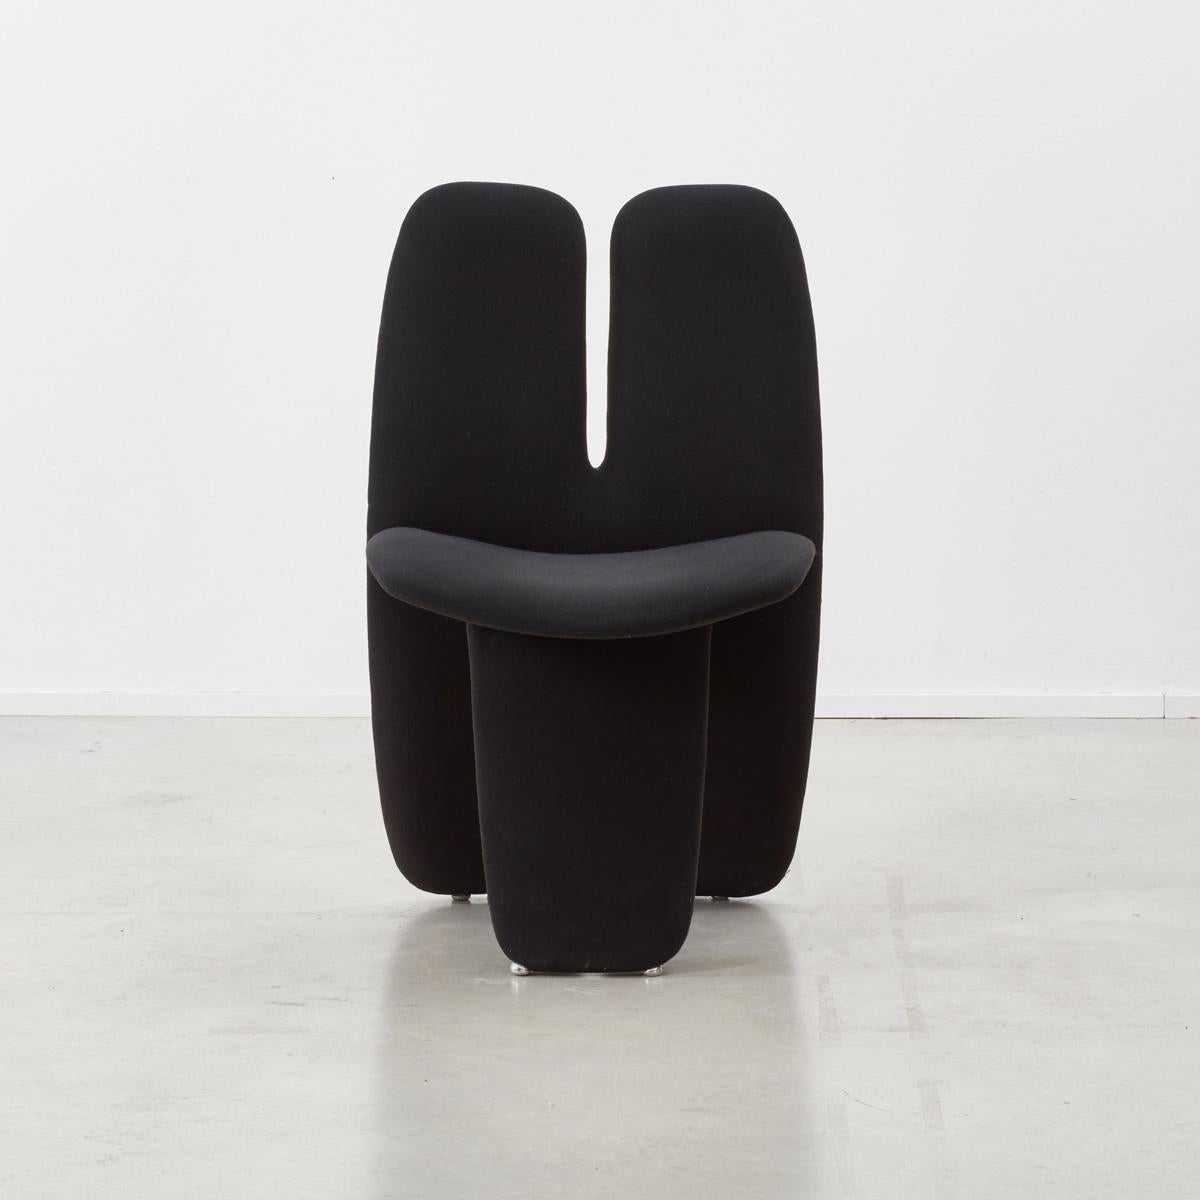 Late 20th Century Luigi Saccardo Upholstered Chairs Arrmet, Italy 1970